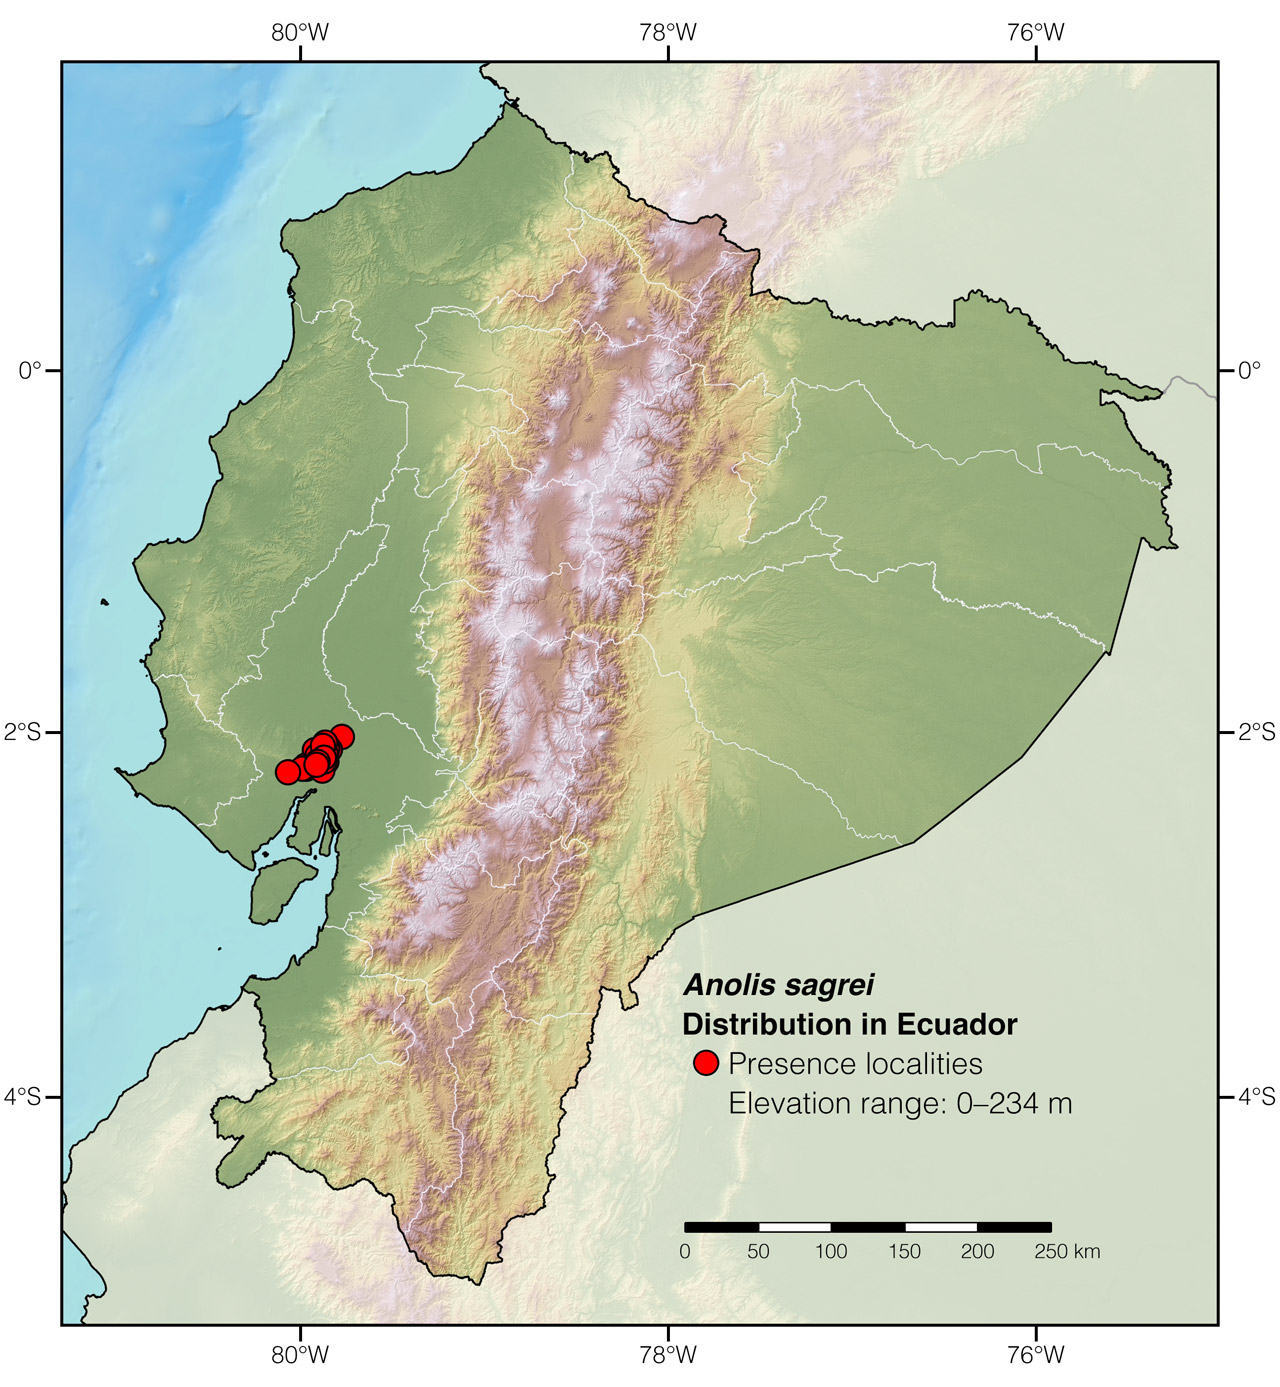 Distribution of Anolis sagrei in Ecuador